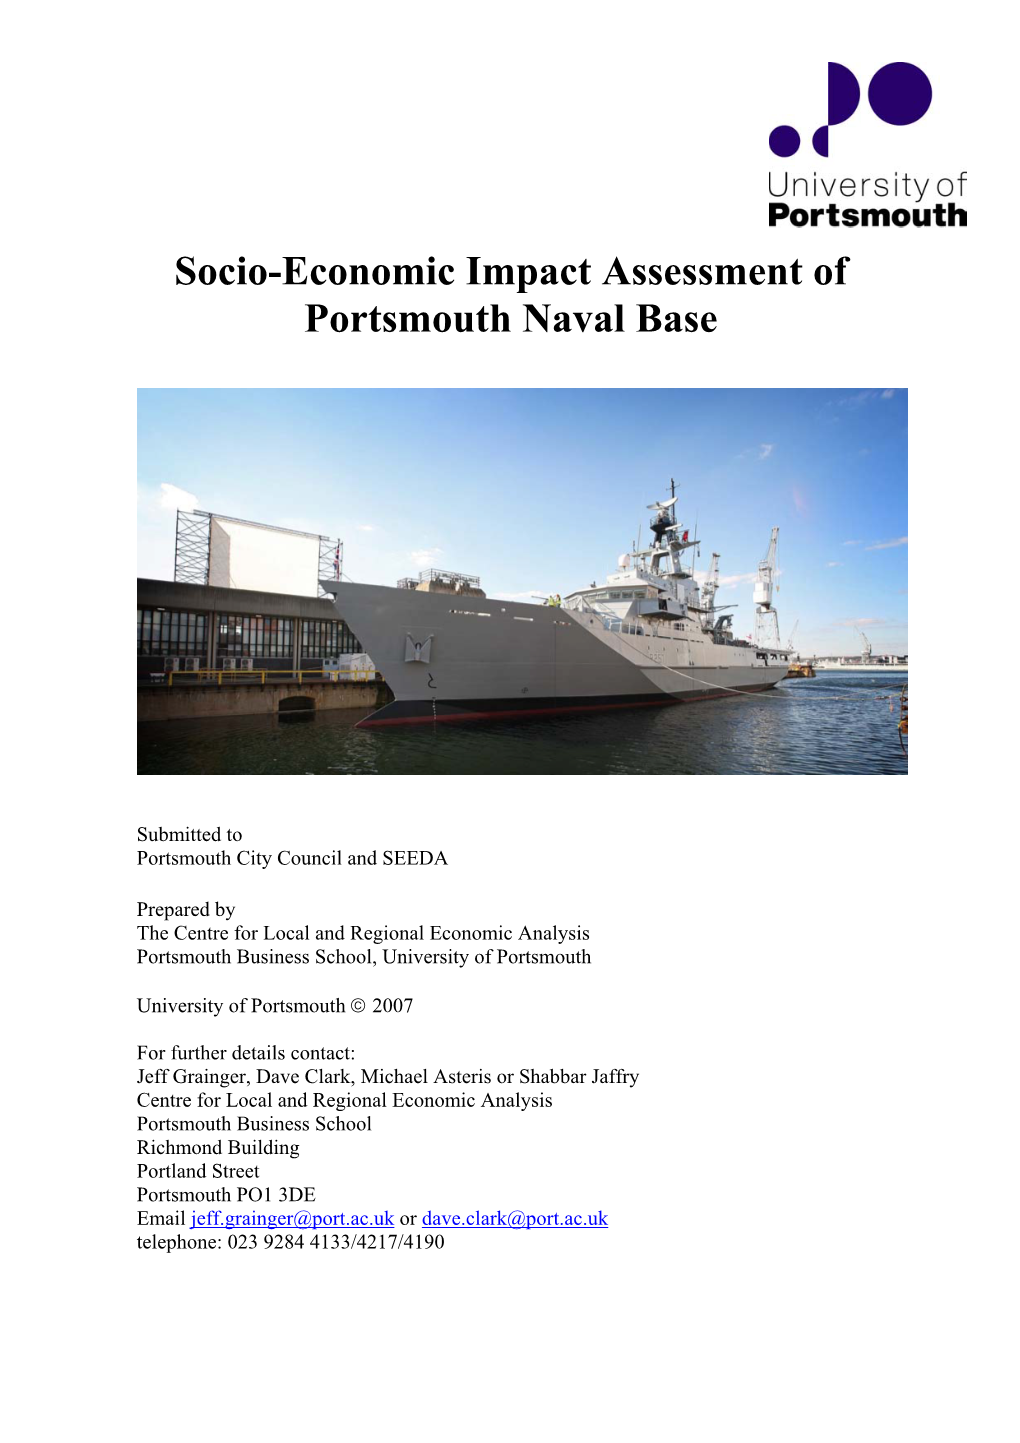 Socio-Economic Impact Assessment of Portsmouth Naval Base